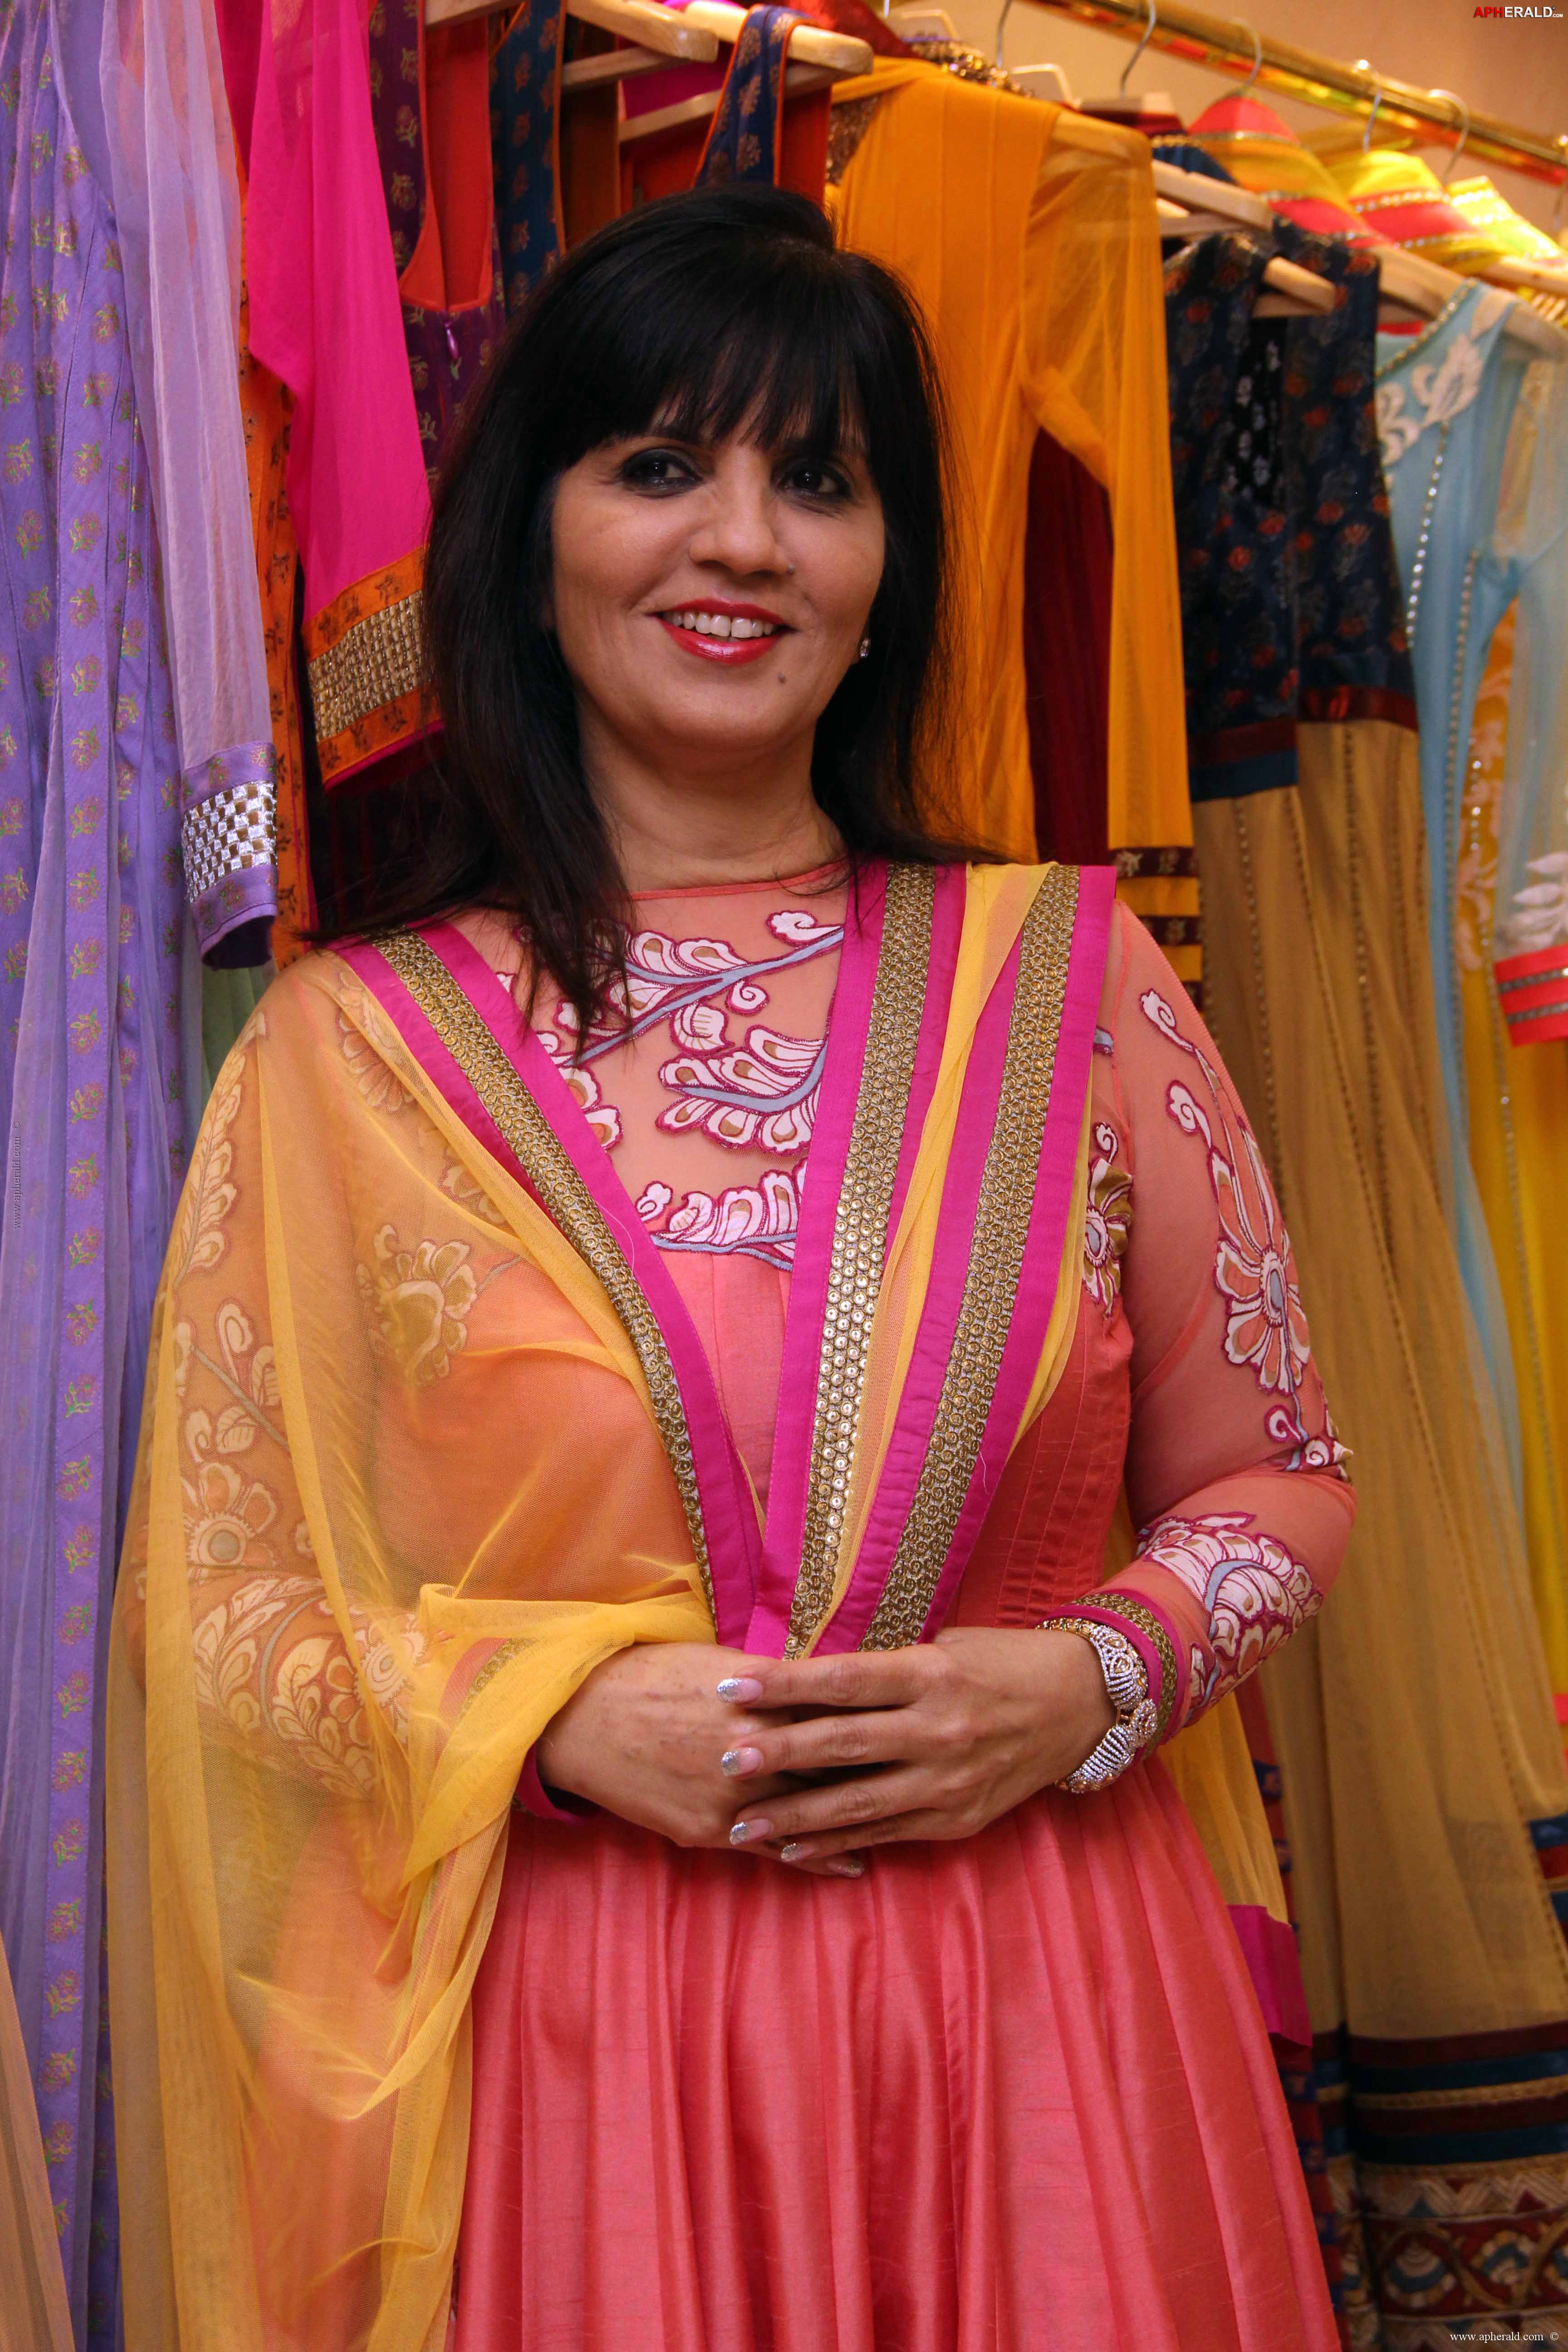 Hema Malini At Neeta Lulla's Flagship Store